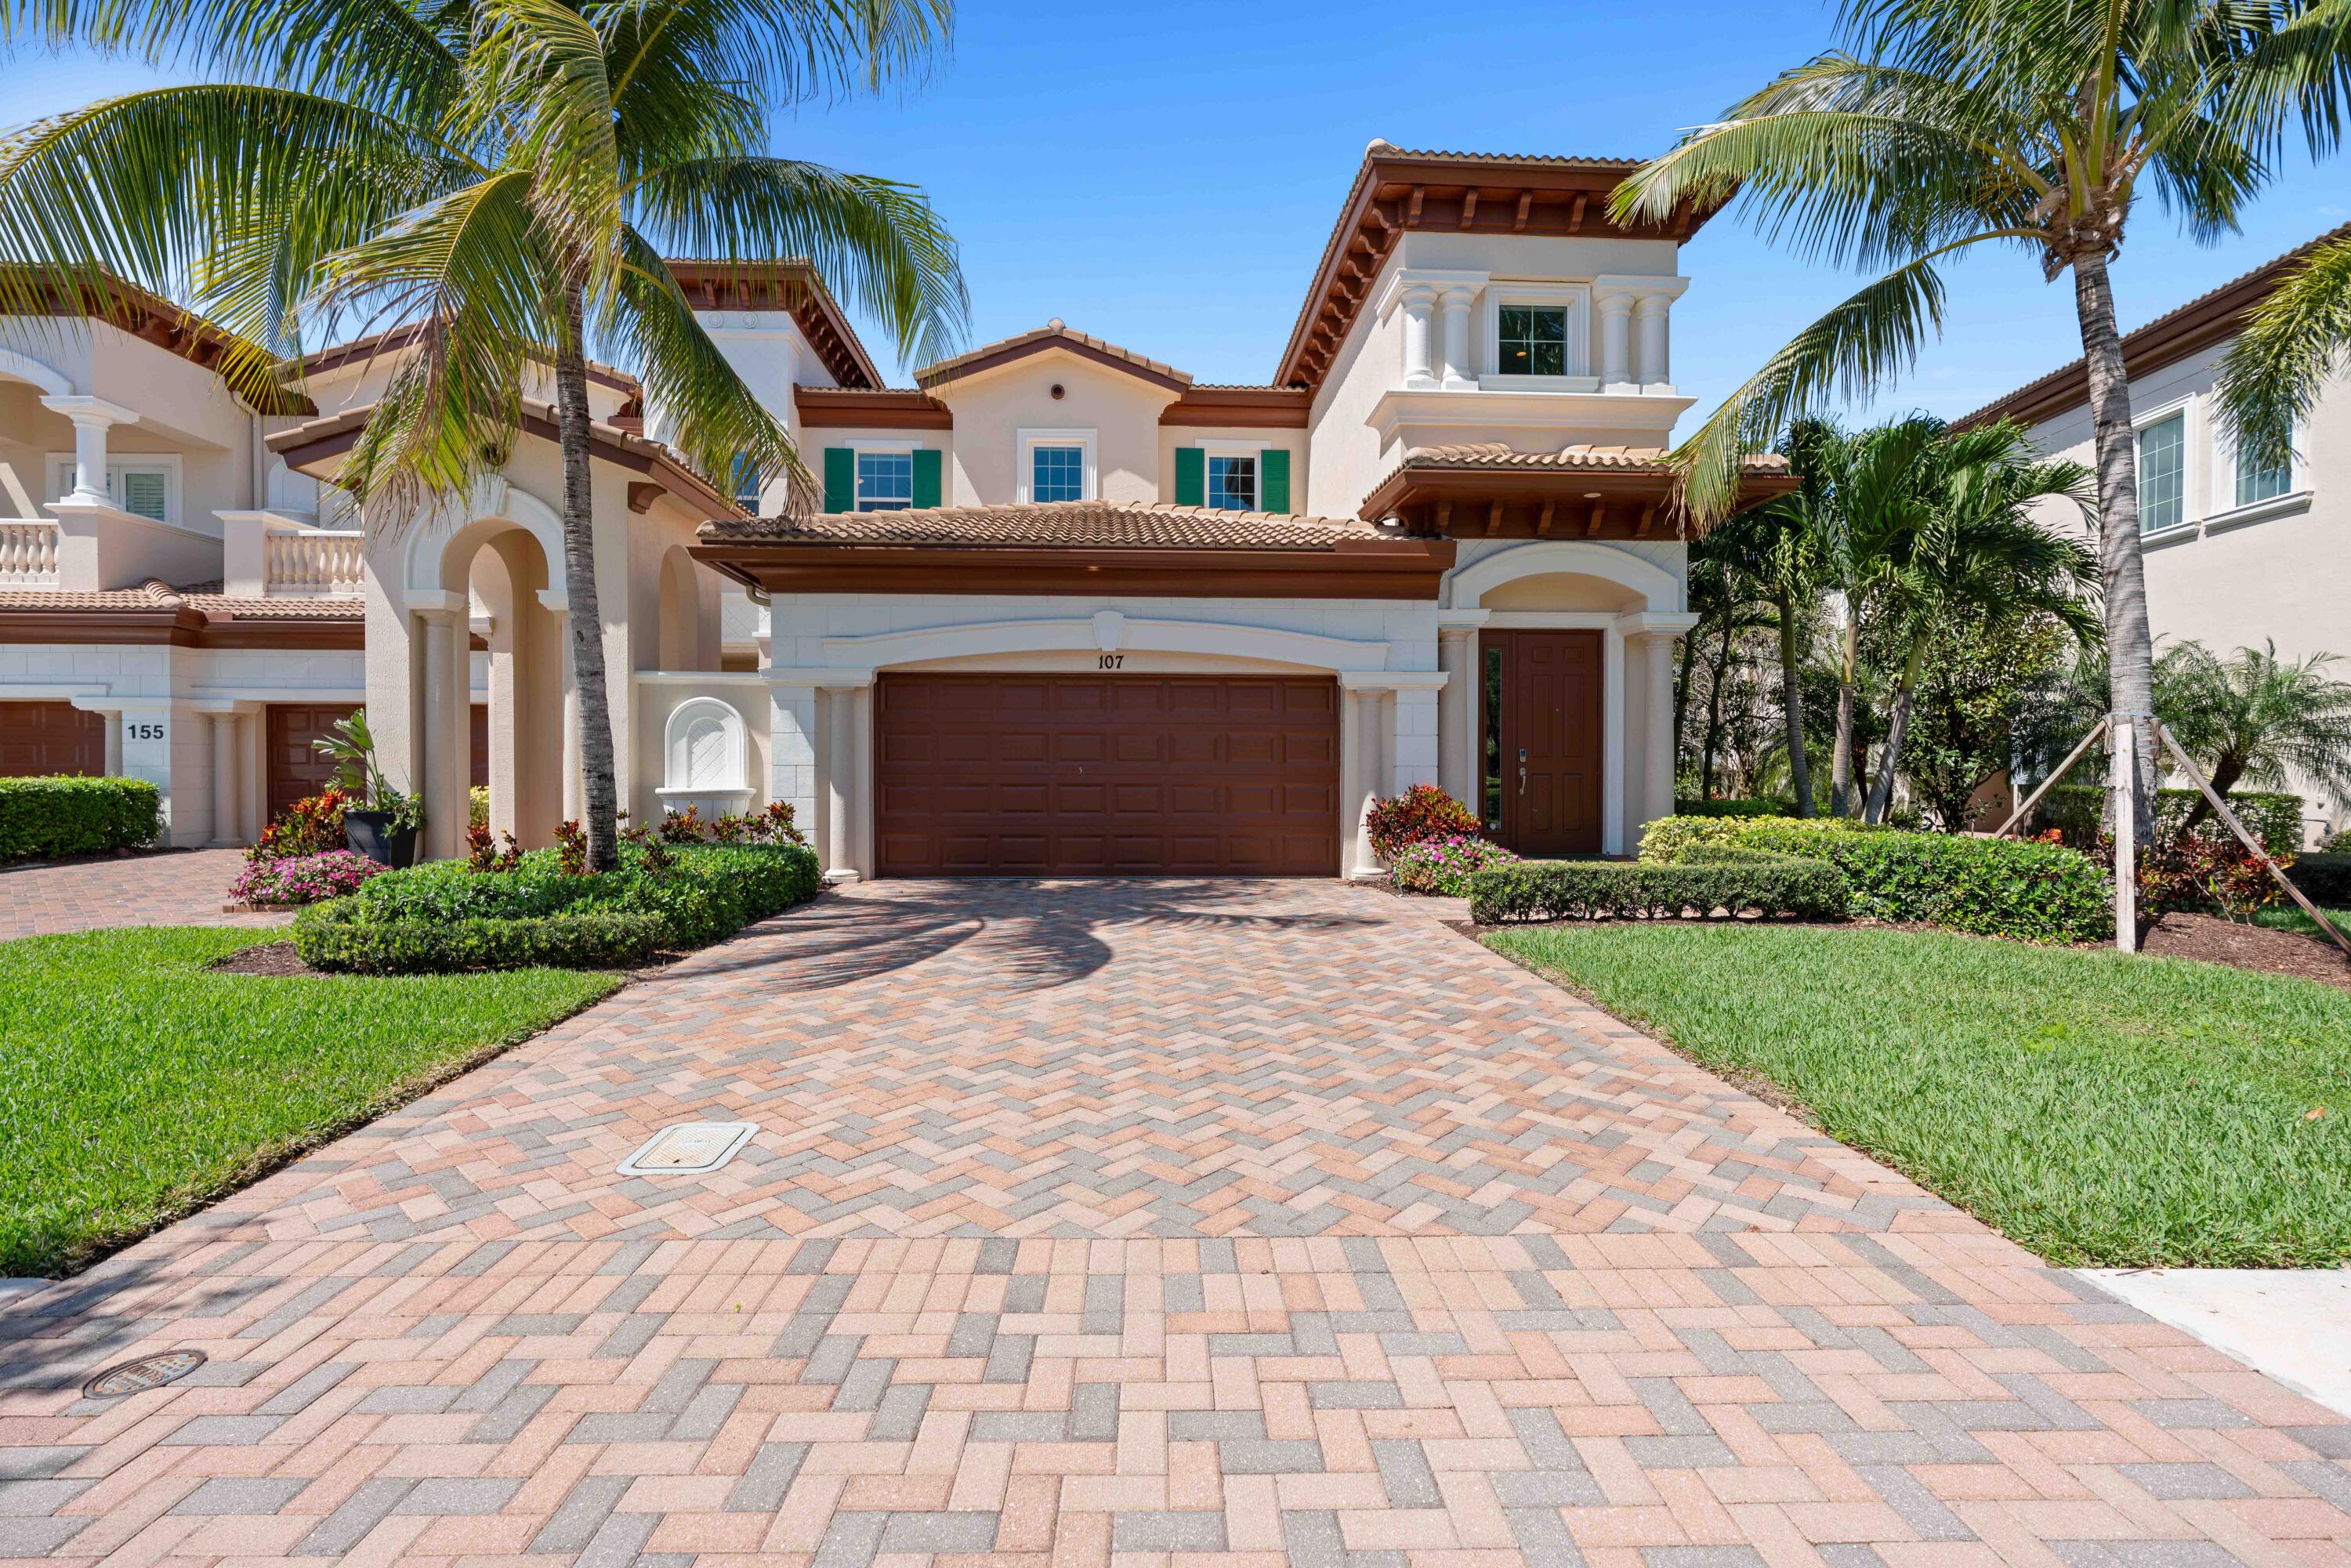 Property for Sale at 155 Tresana Boulevard 107, Jupiter, Palm Beach County, Florida - Bedrooms: 3 
Bathrooms: 2.5  - $1,199,000